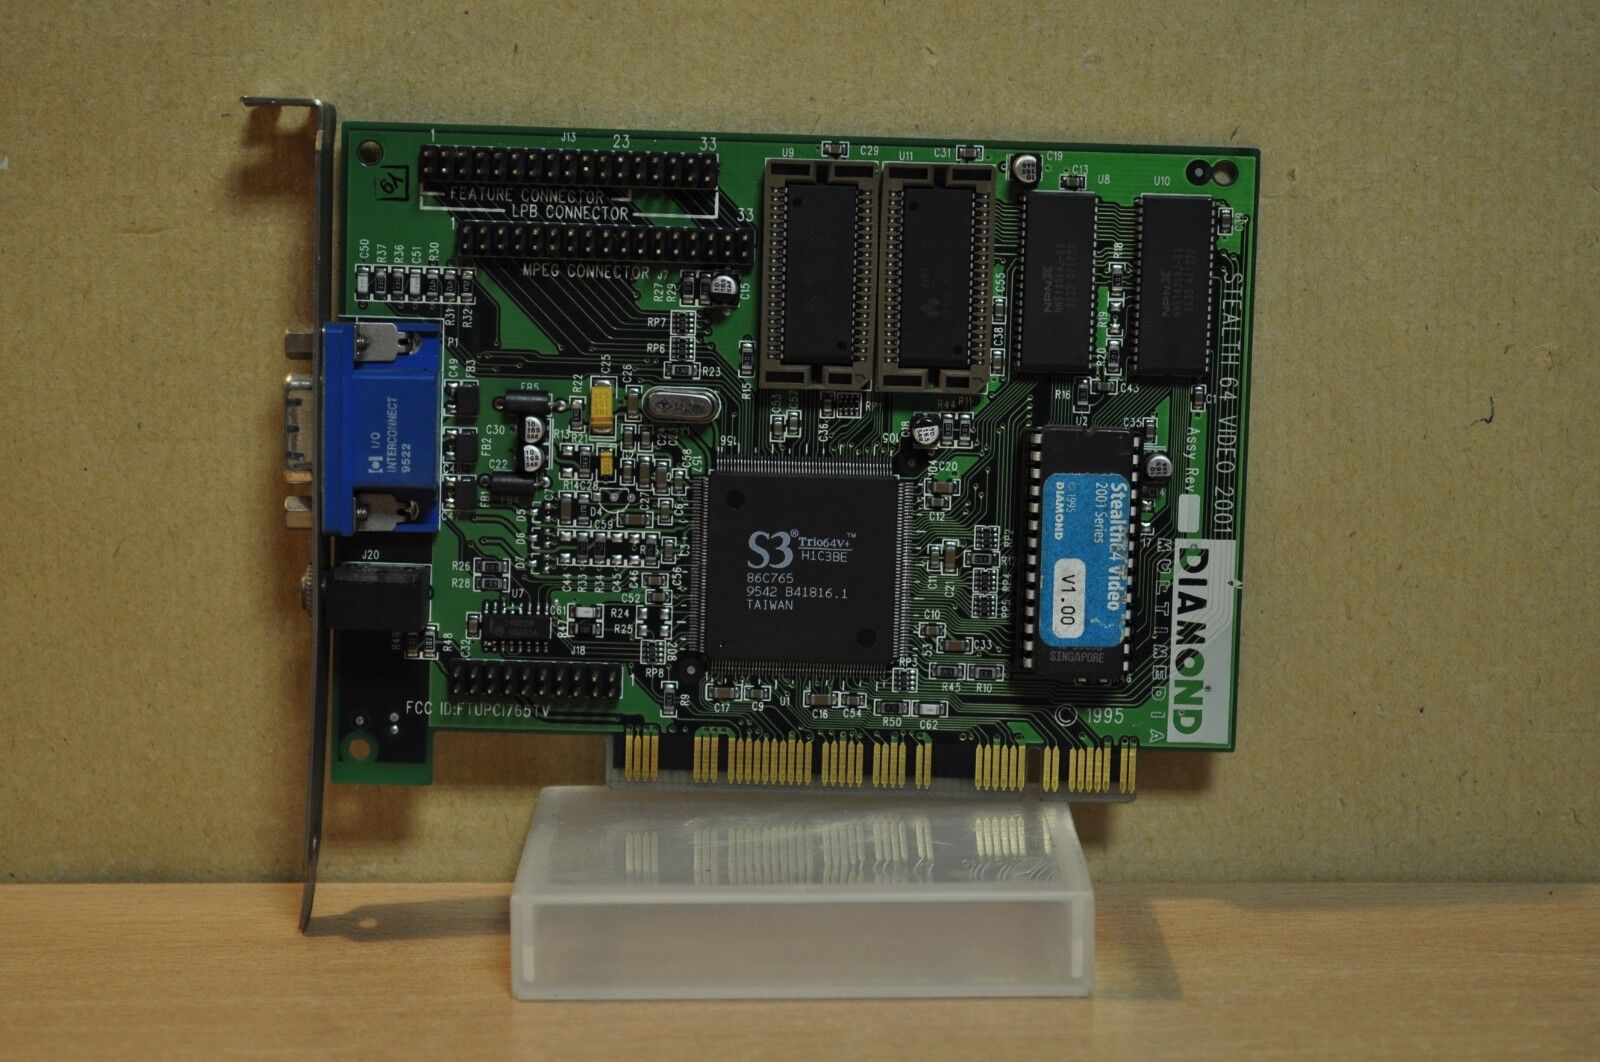 Diamond Multimedia STEALTH 64 S3 TRIO64V+ 86C765 2MB FTUPCI765TV PCI Video Card